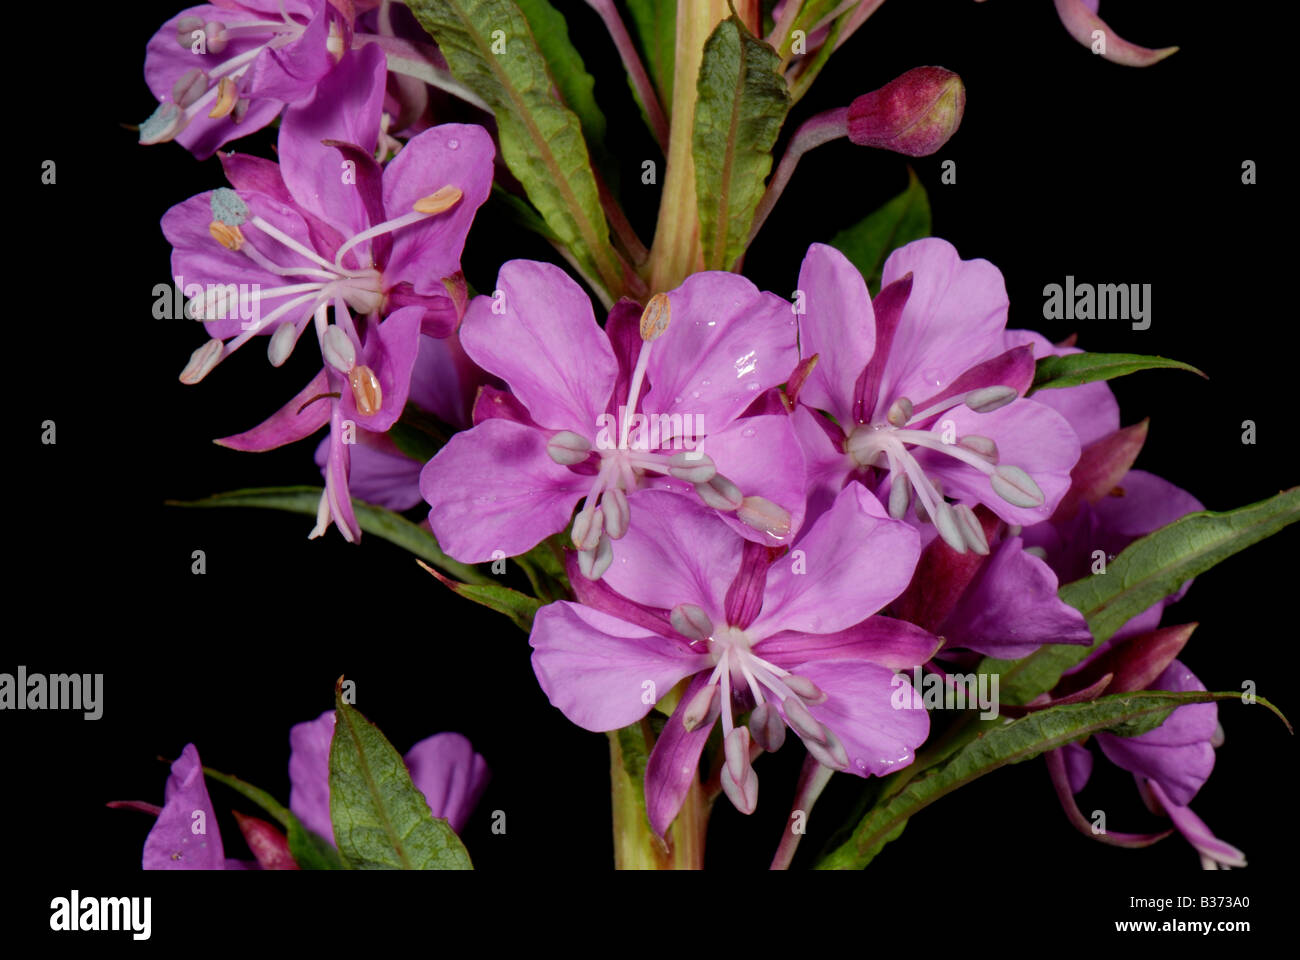 Rosebay willowherb (Chamaenerion augustifolium) fiori viola stamens anthers stile e germogli Foto Stock